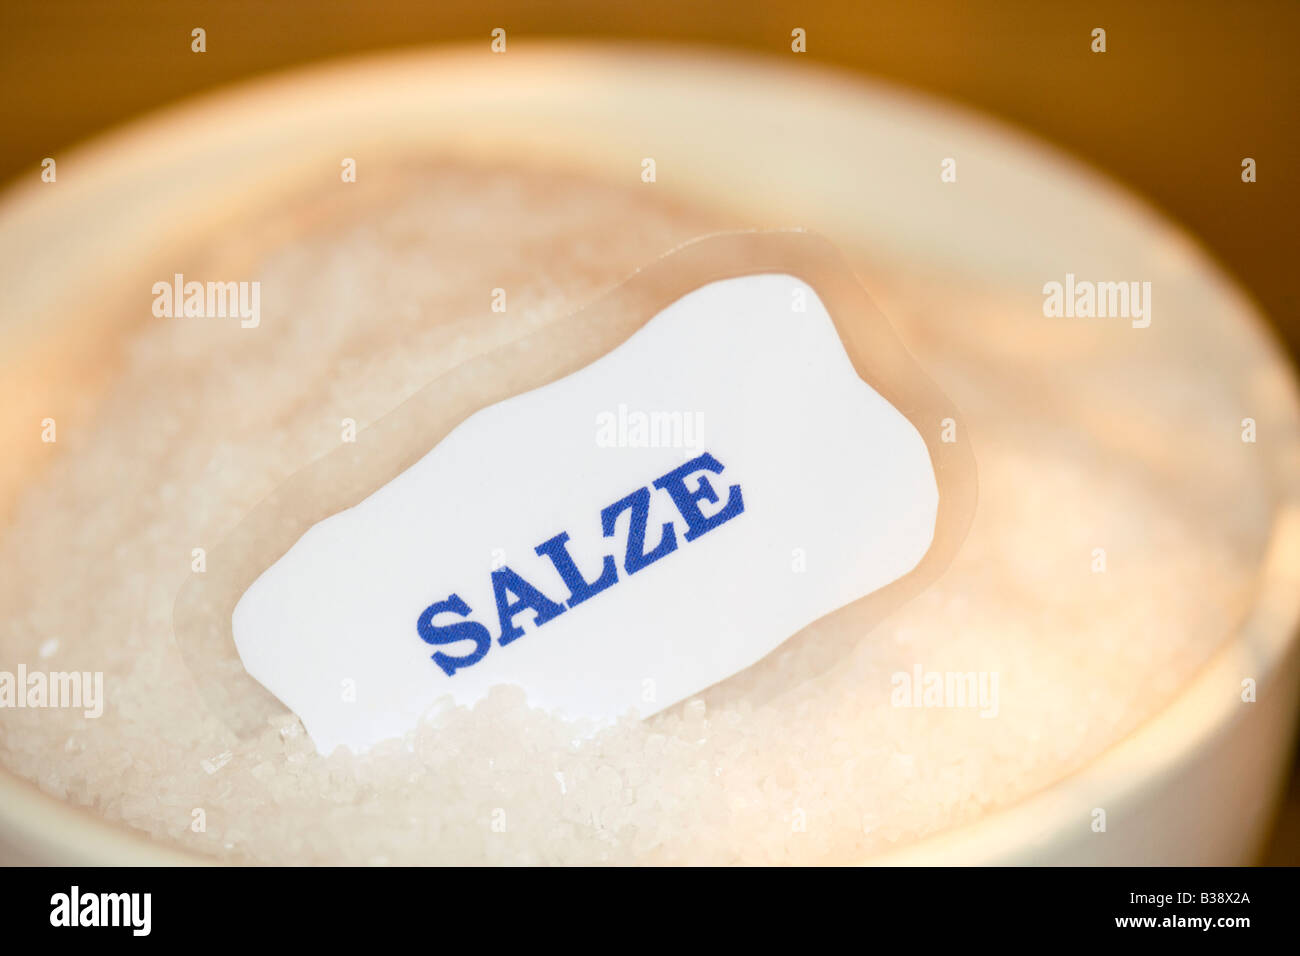 Pflegesalz, care salt Stock Photo